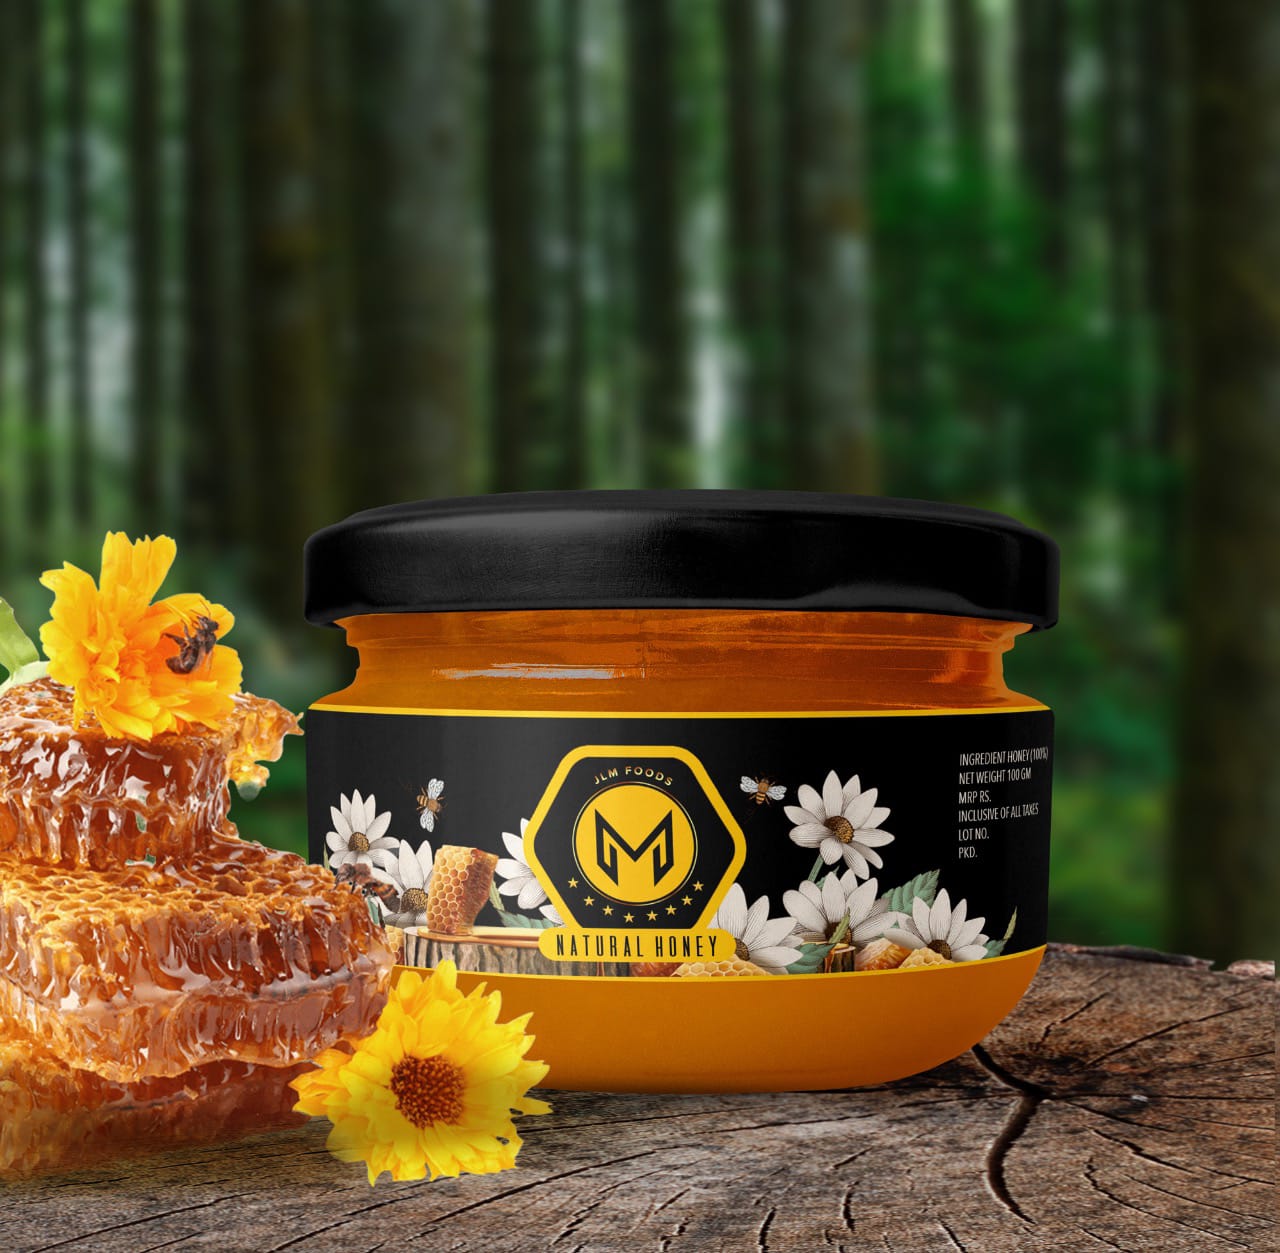 JLM Foods Natural Honey